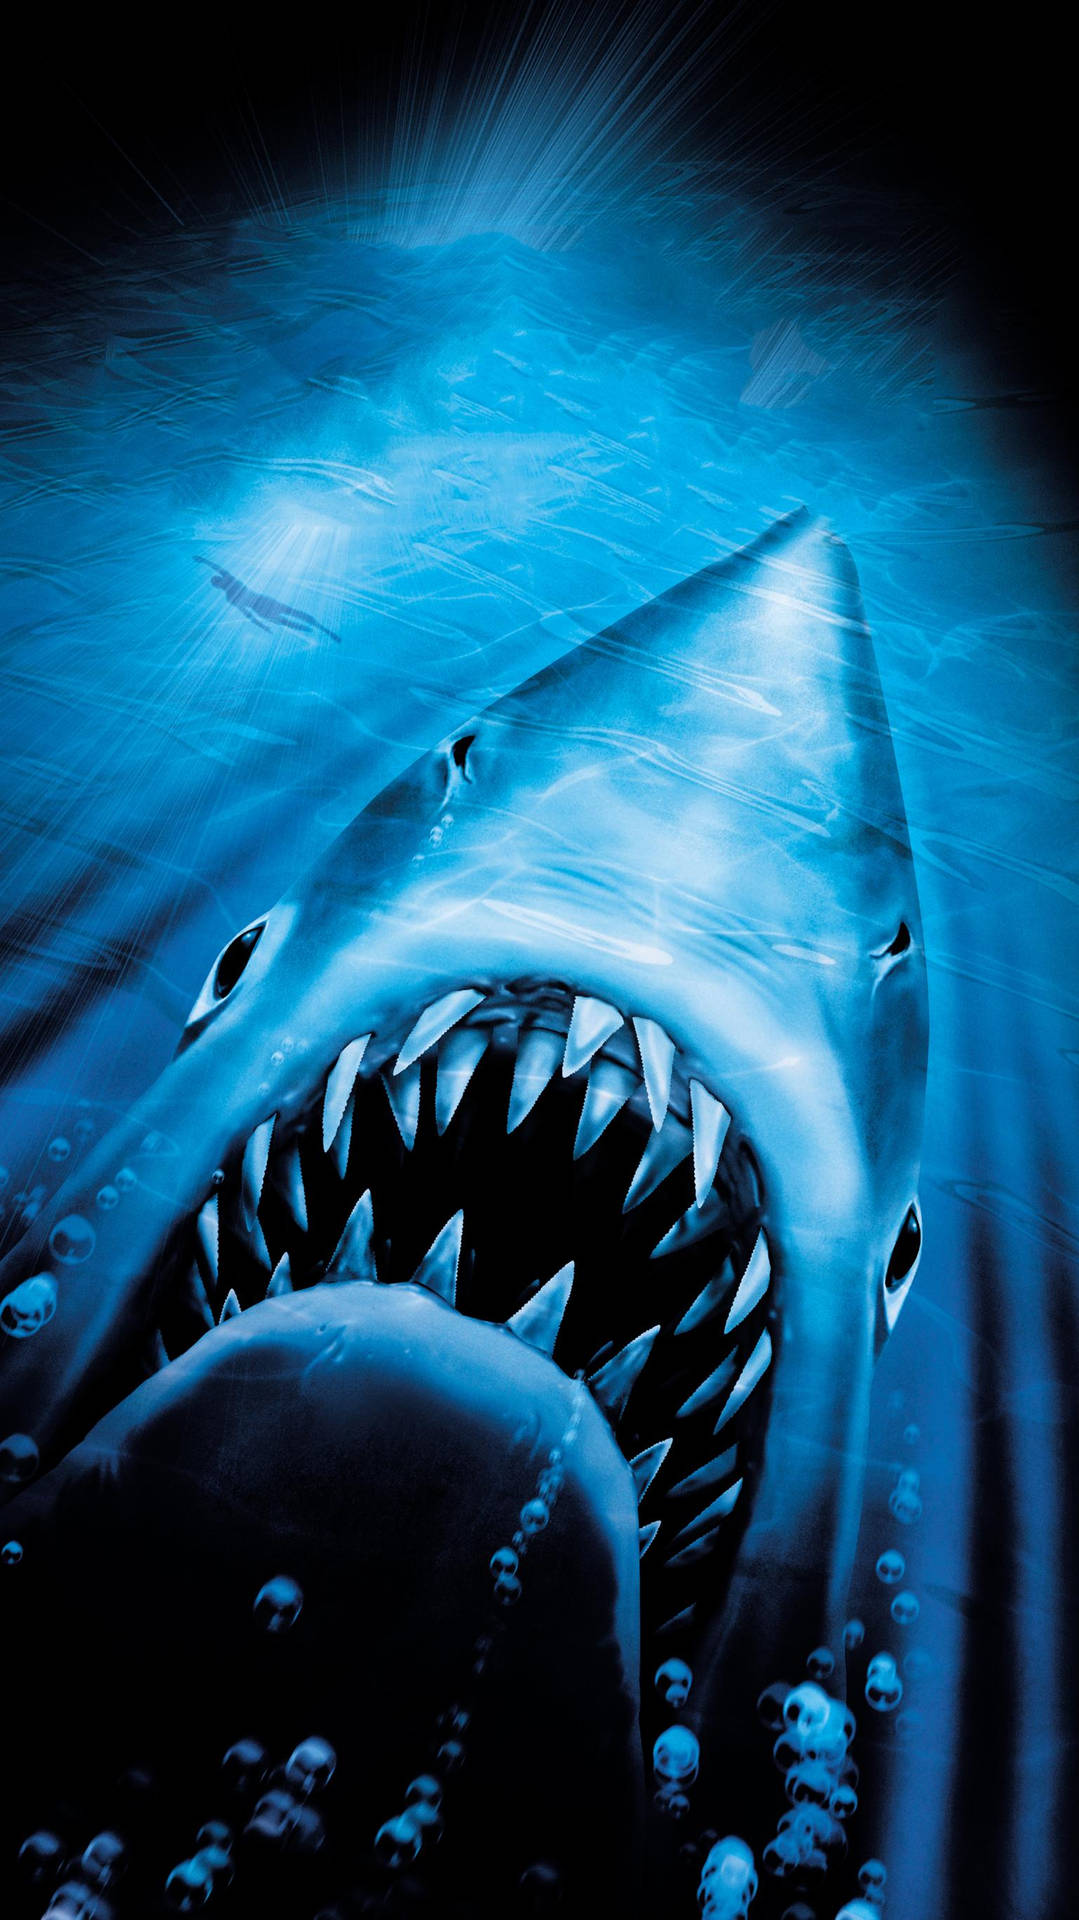 Closed-up Jaws Shark